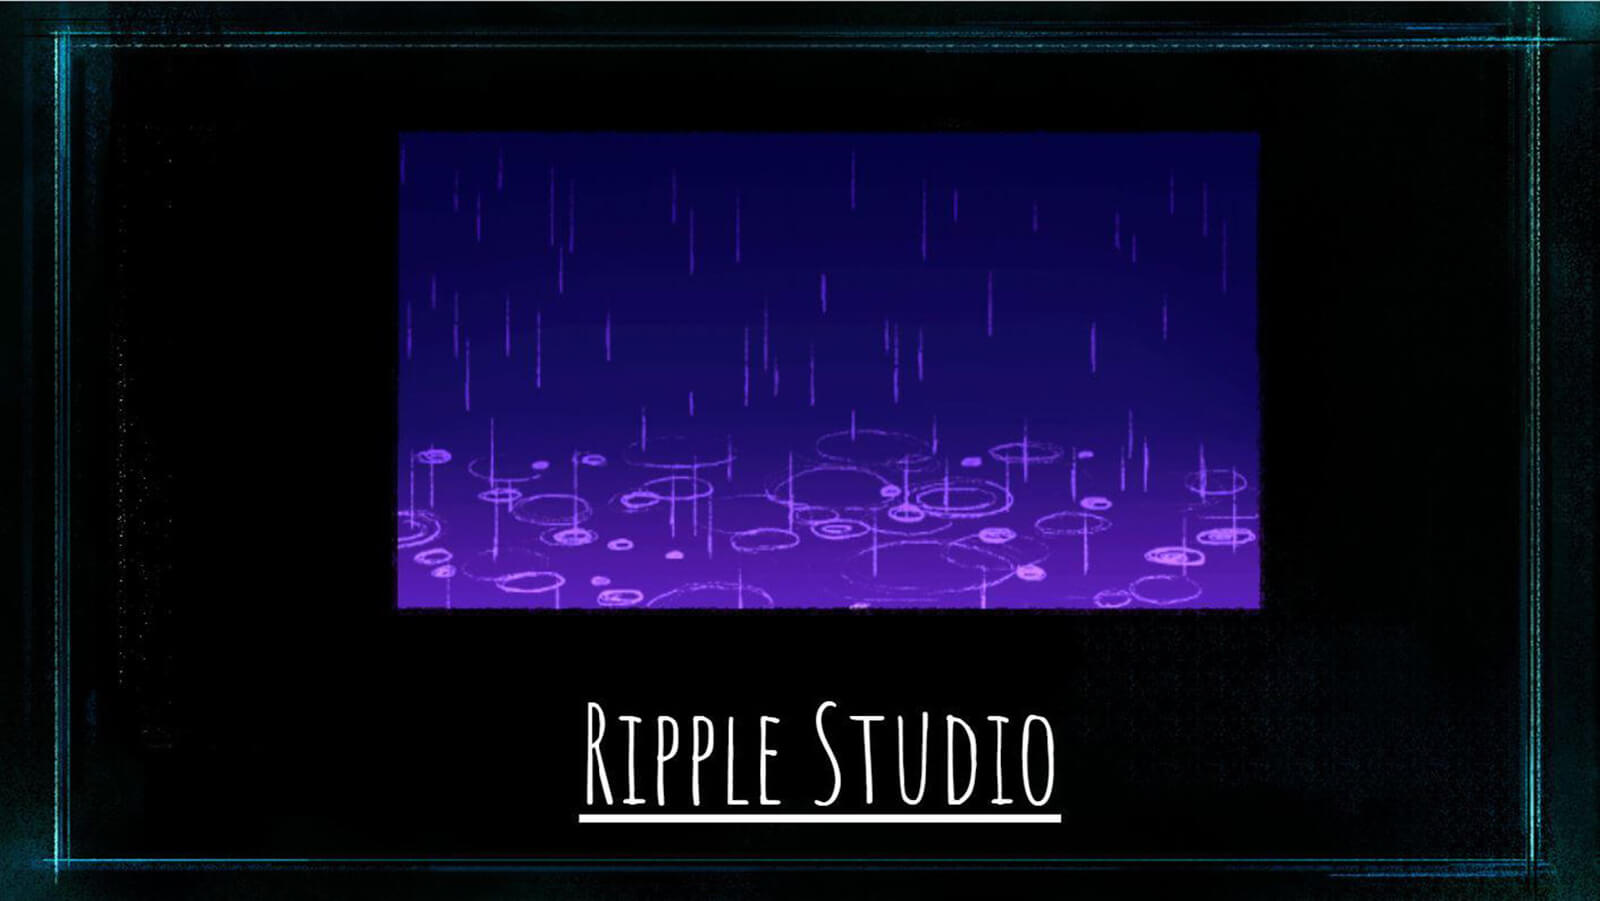 Student animation team Ripple Studio's logo card, featuring purple and blue rain drops.